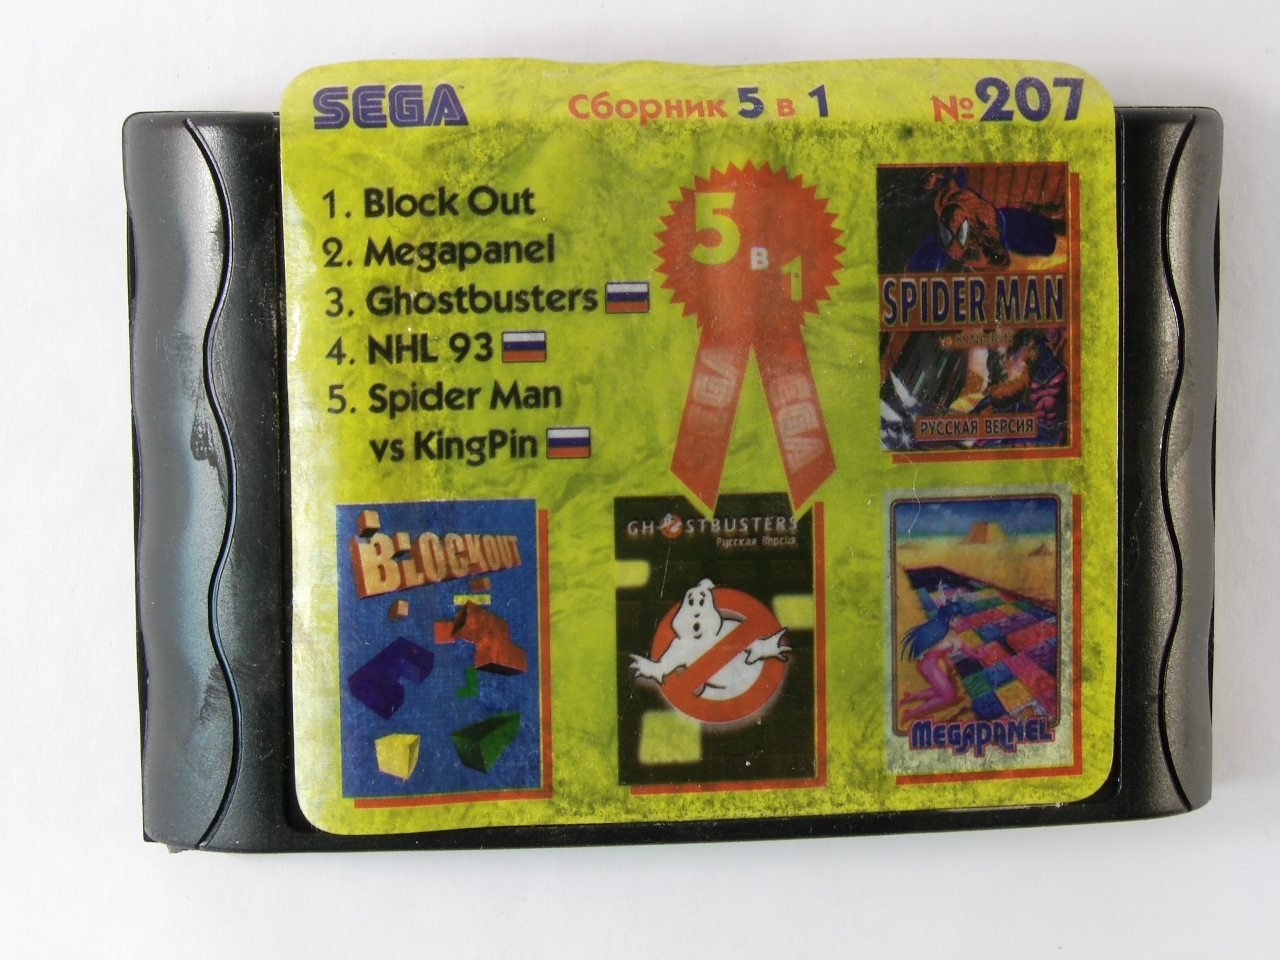 Картридж для Sega № 207 5 in 1 (Sega), Biockout, Ghostbusters, NHL 93, Spider Man vs Kingpin